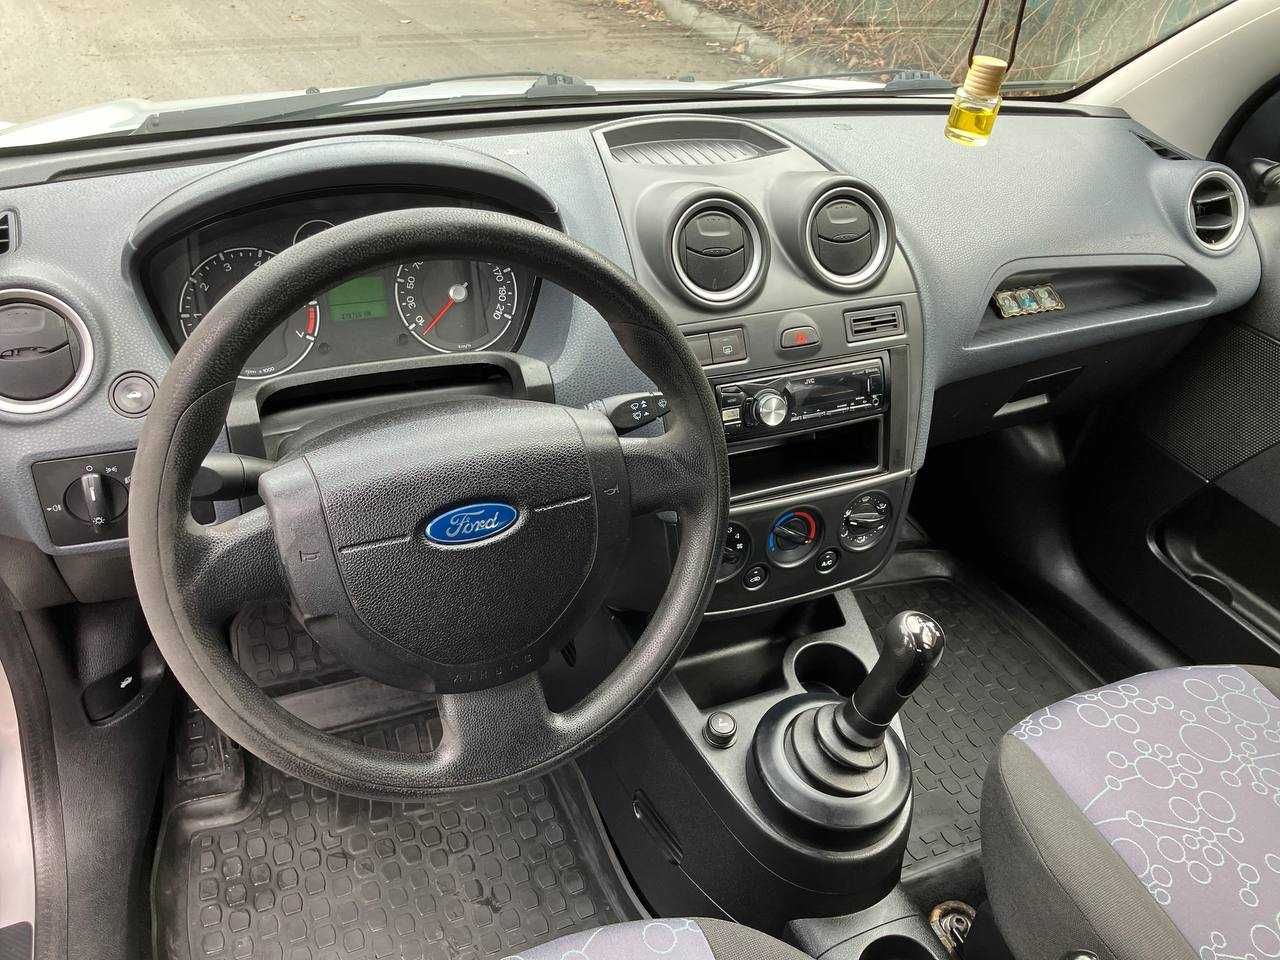 Ford Fiesta 2007 1.4